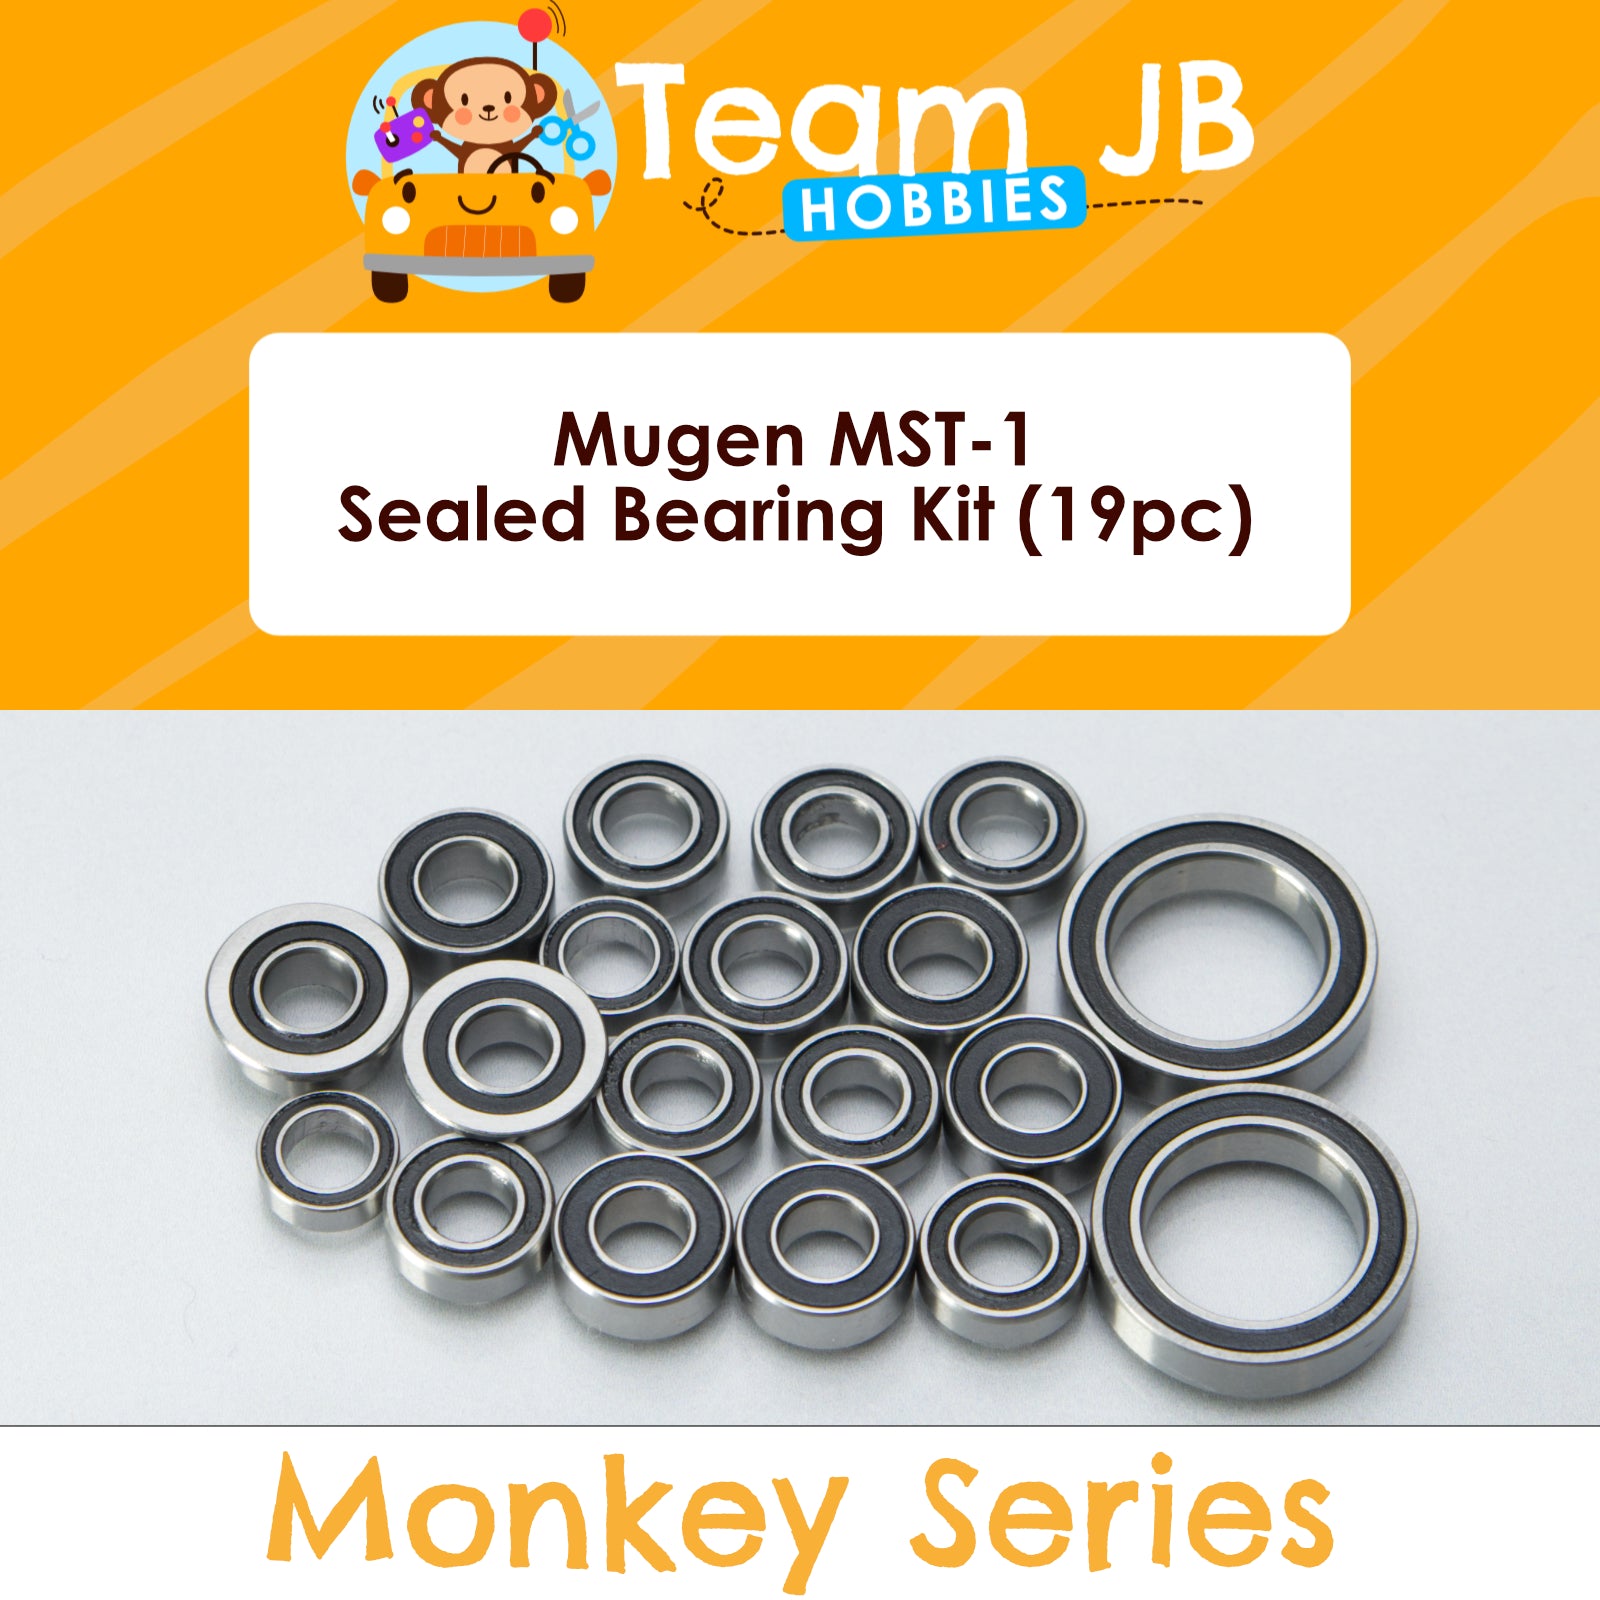 Mugen MST-1 - Sealed Bearing Kit